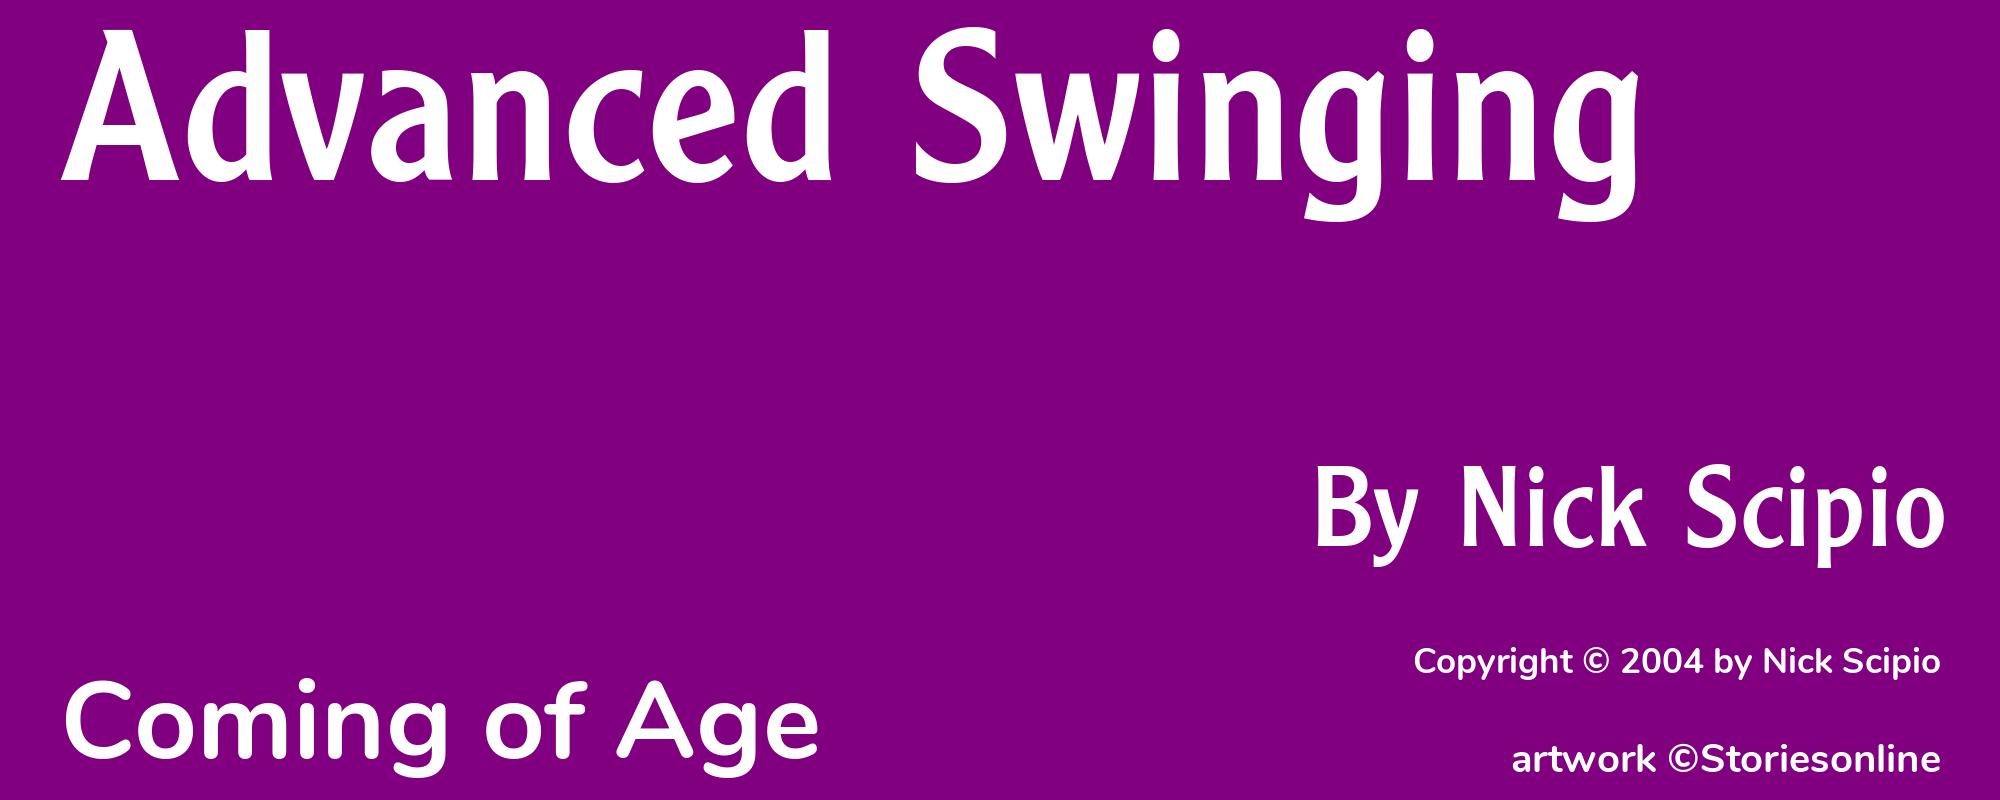 Advanced Swinging - Cover